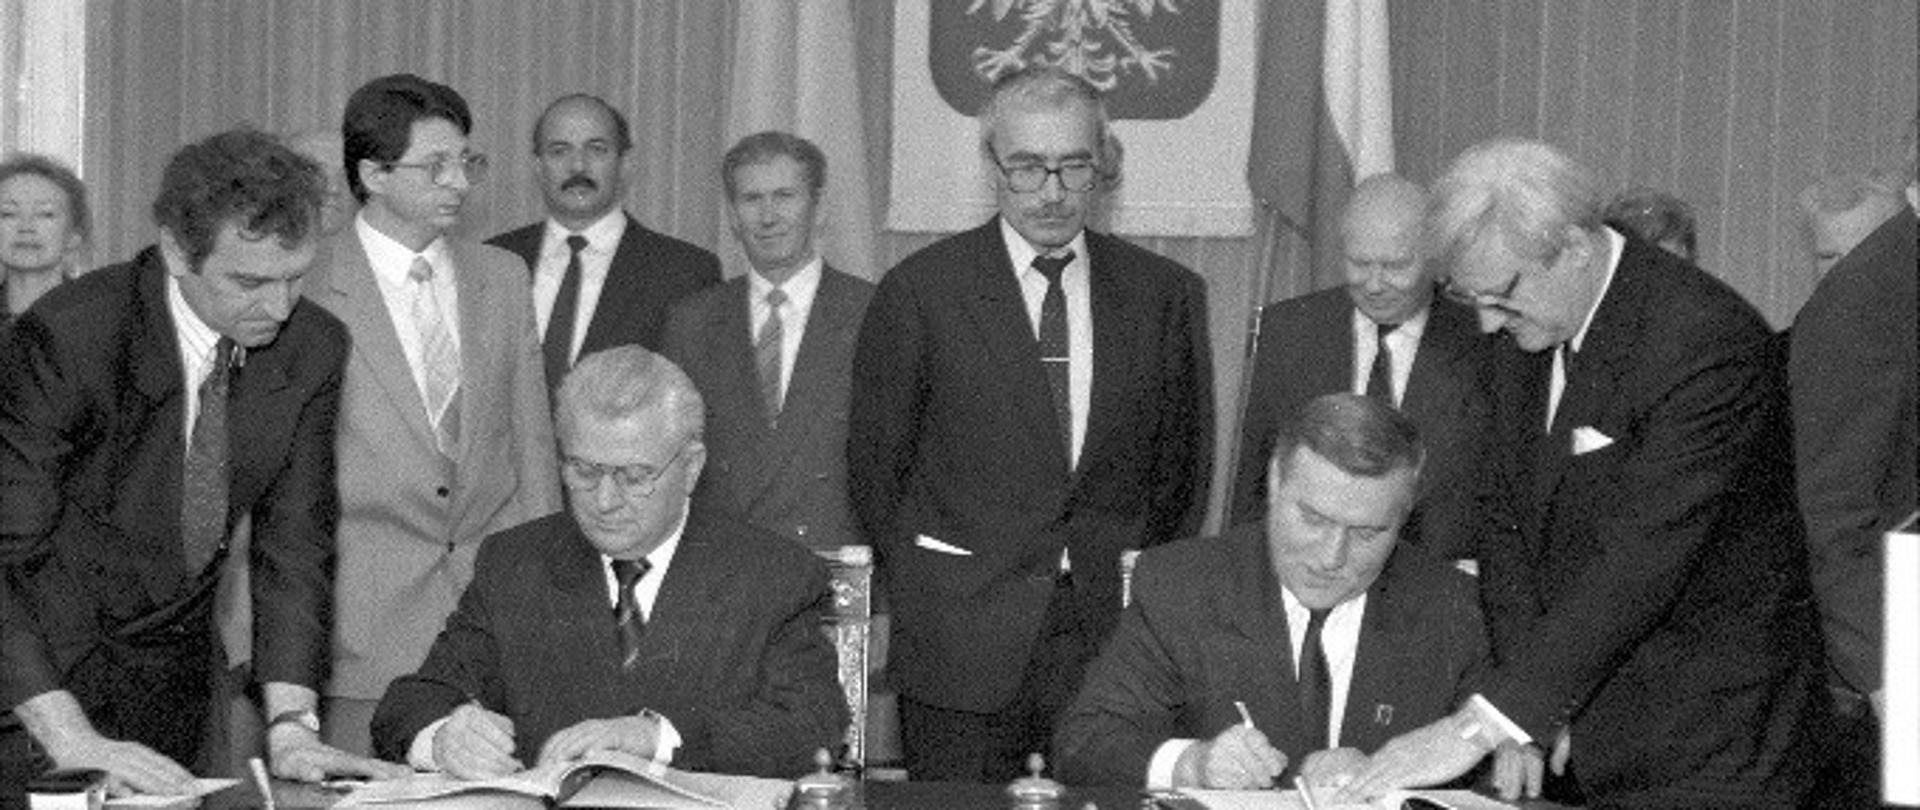 Poland and Ukraine - Thirty Years of Partnership and Friendship